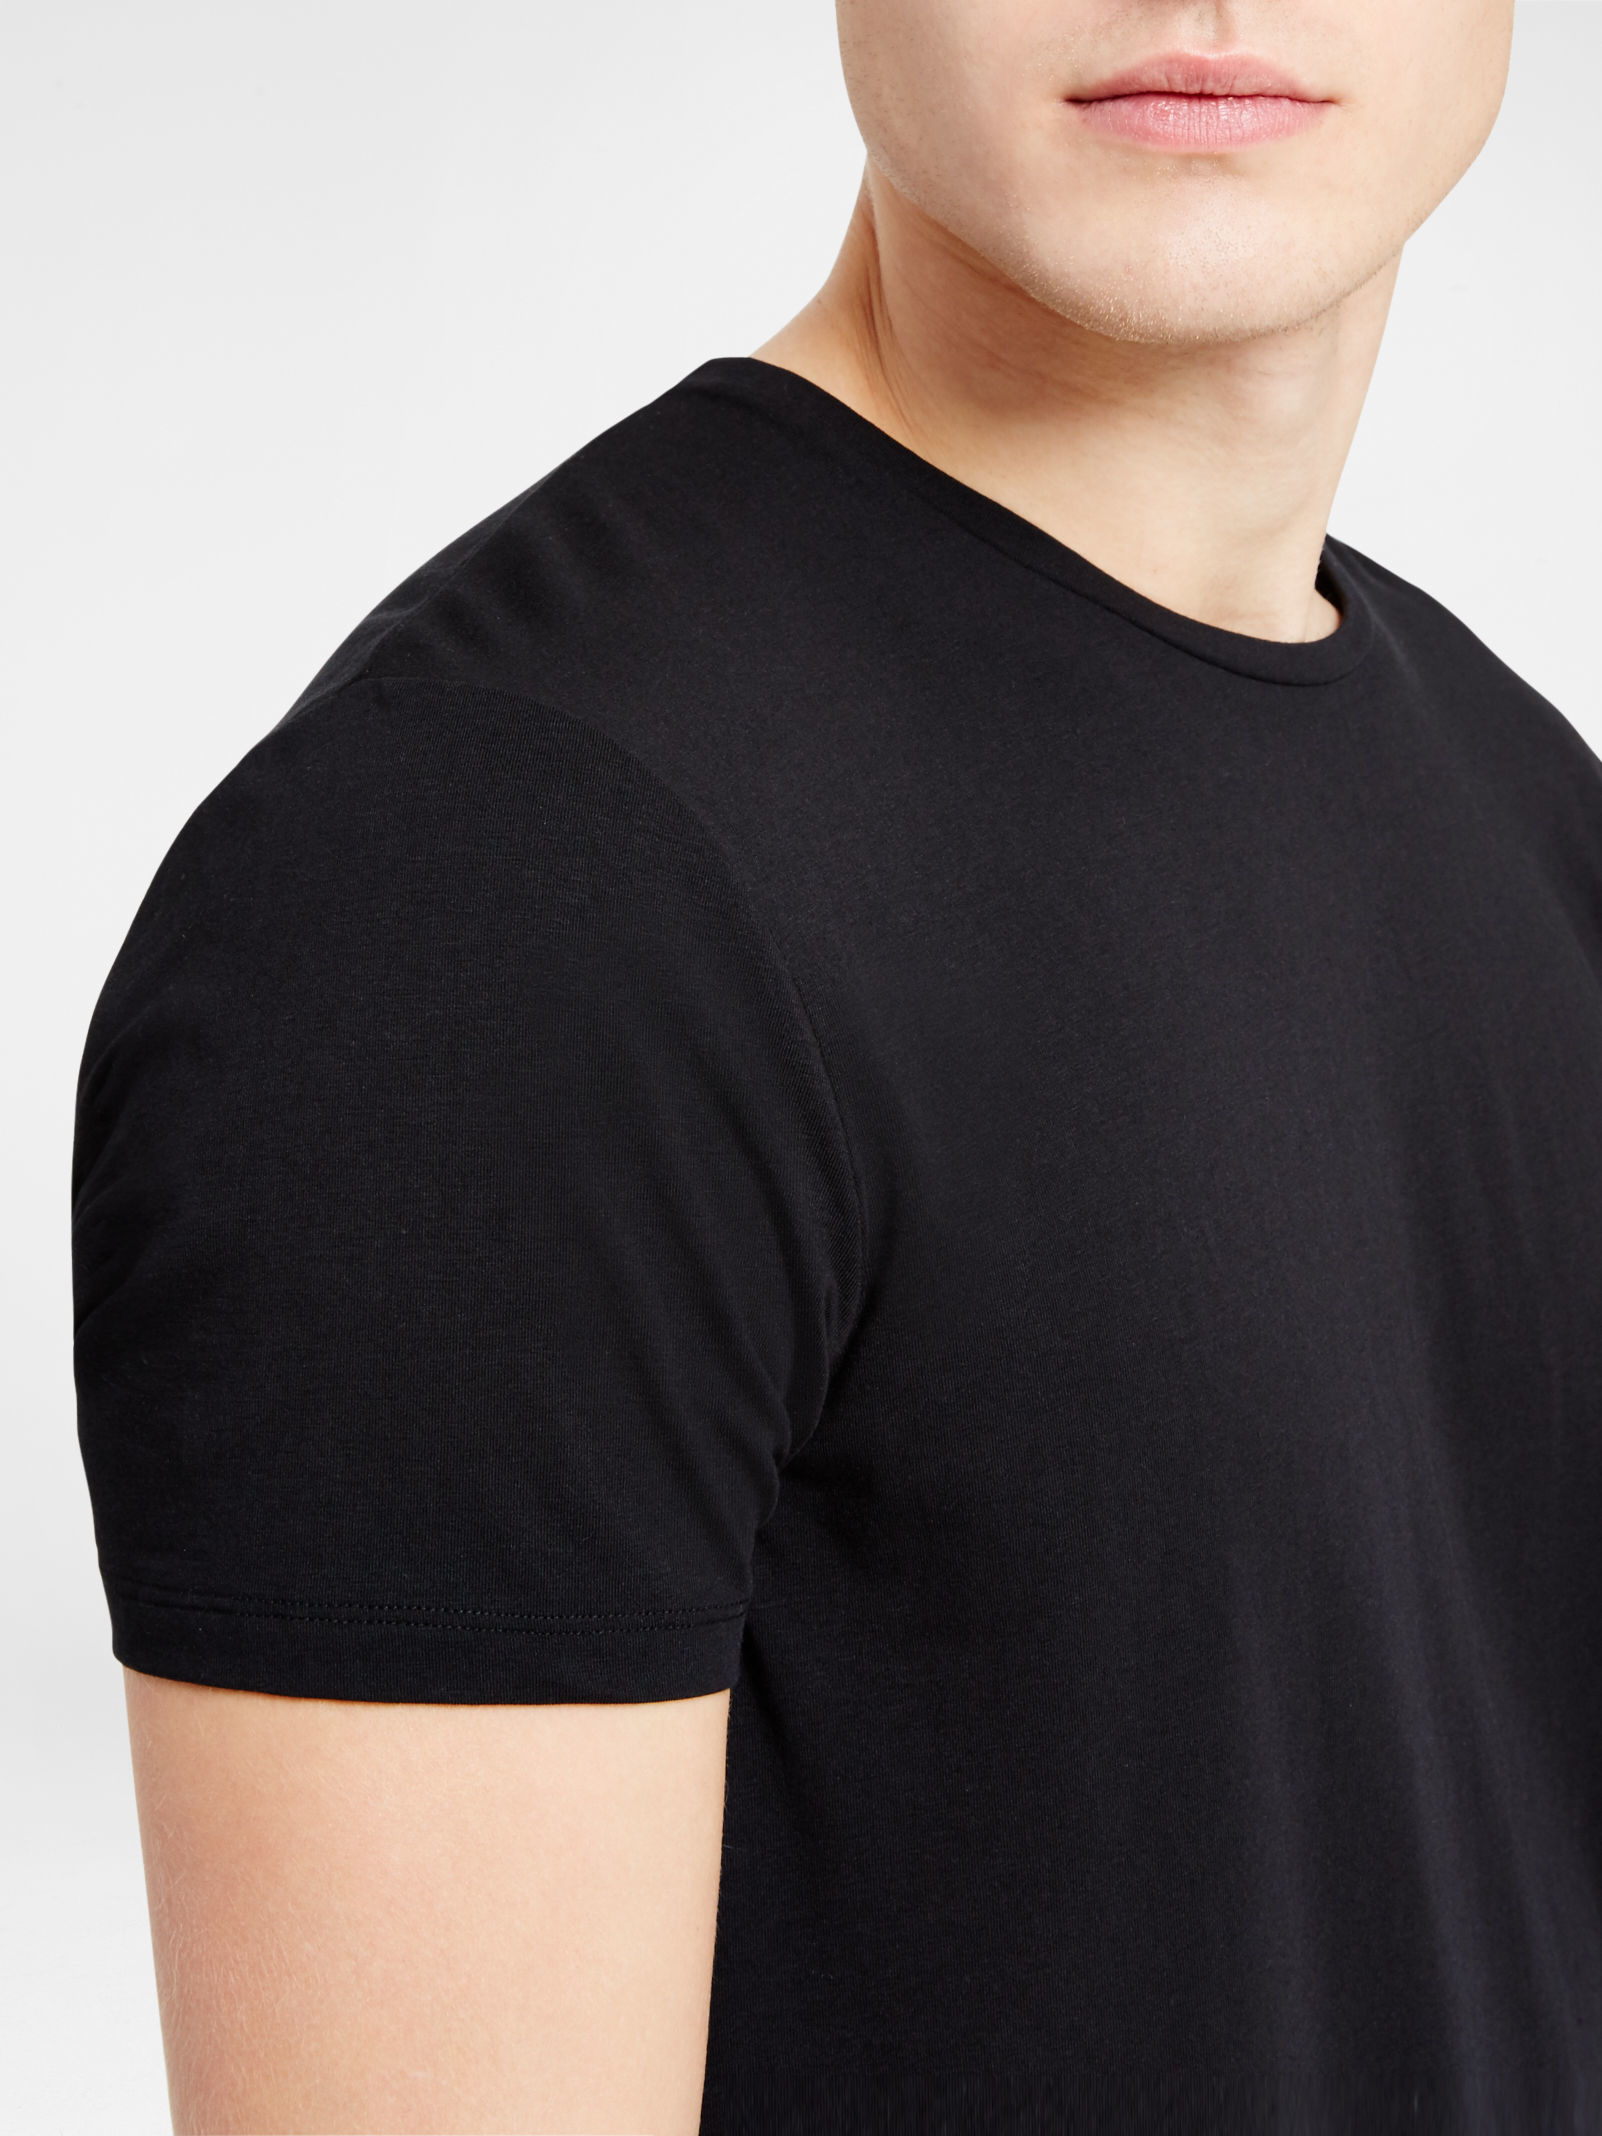 DKNY Crew Neck T-shirt in Black for Men - Lyst